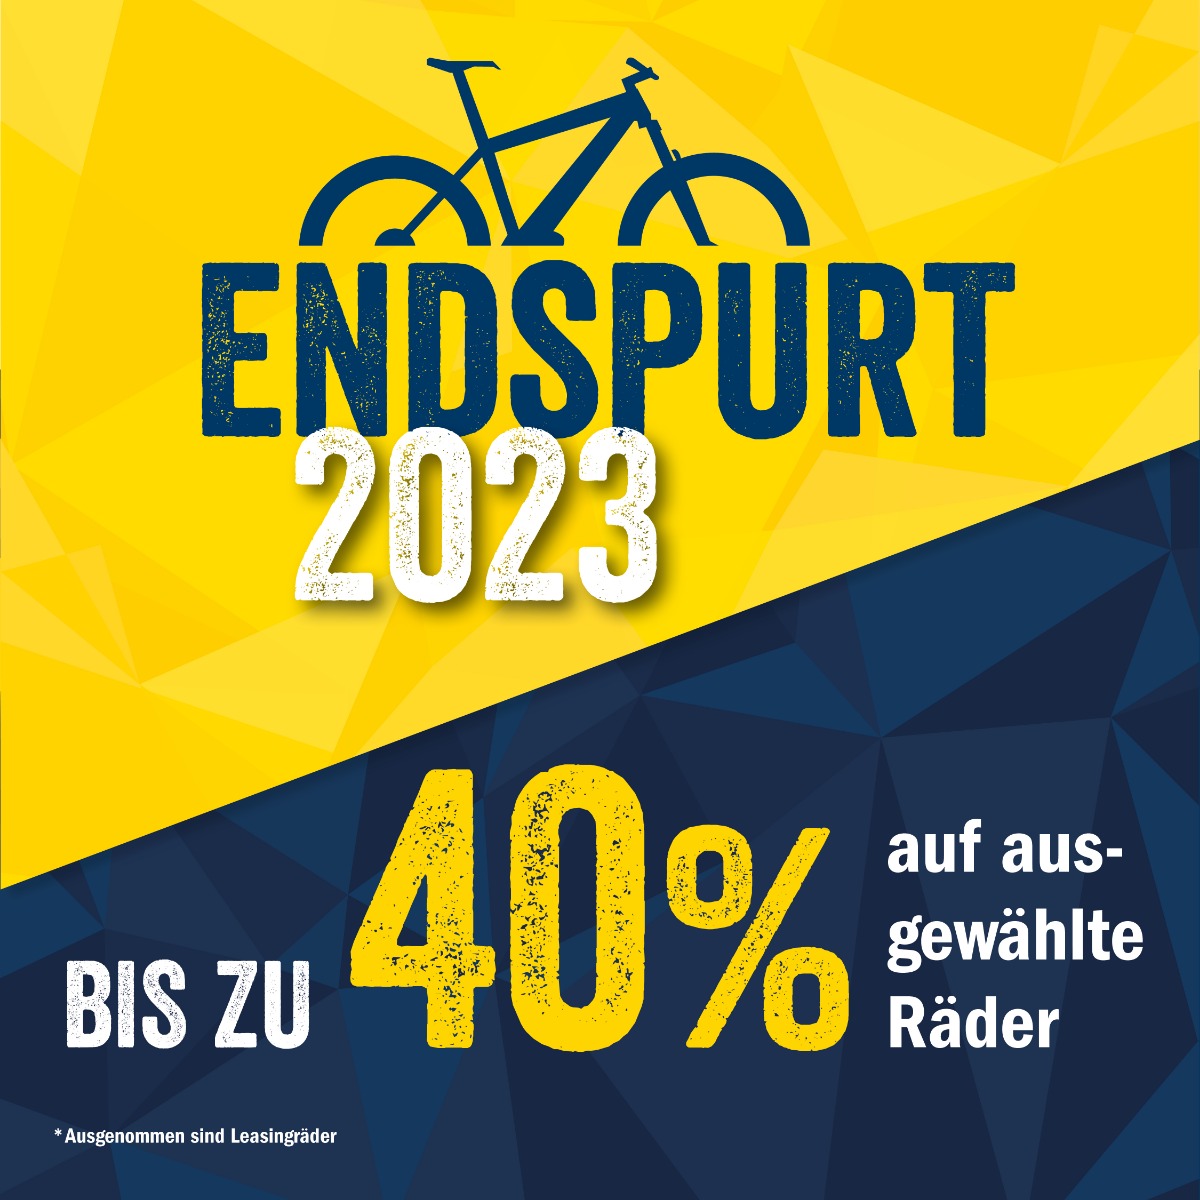 Endspurt 2023 Fahrrad Angebote im BIKE Market